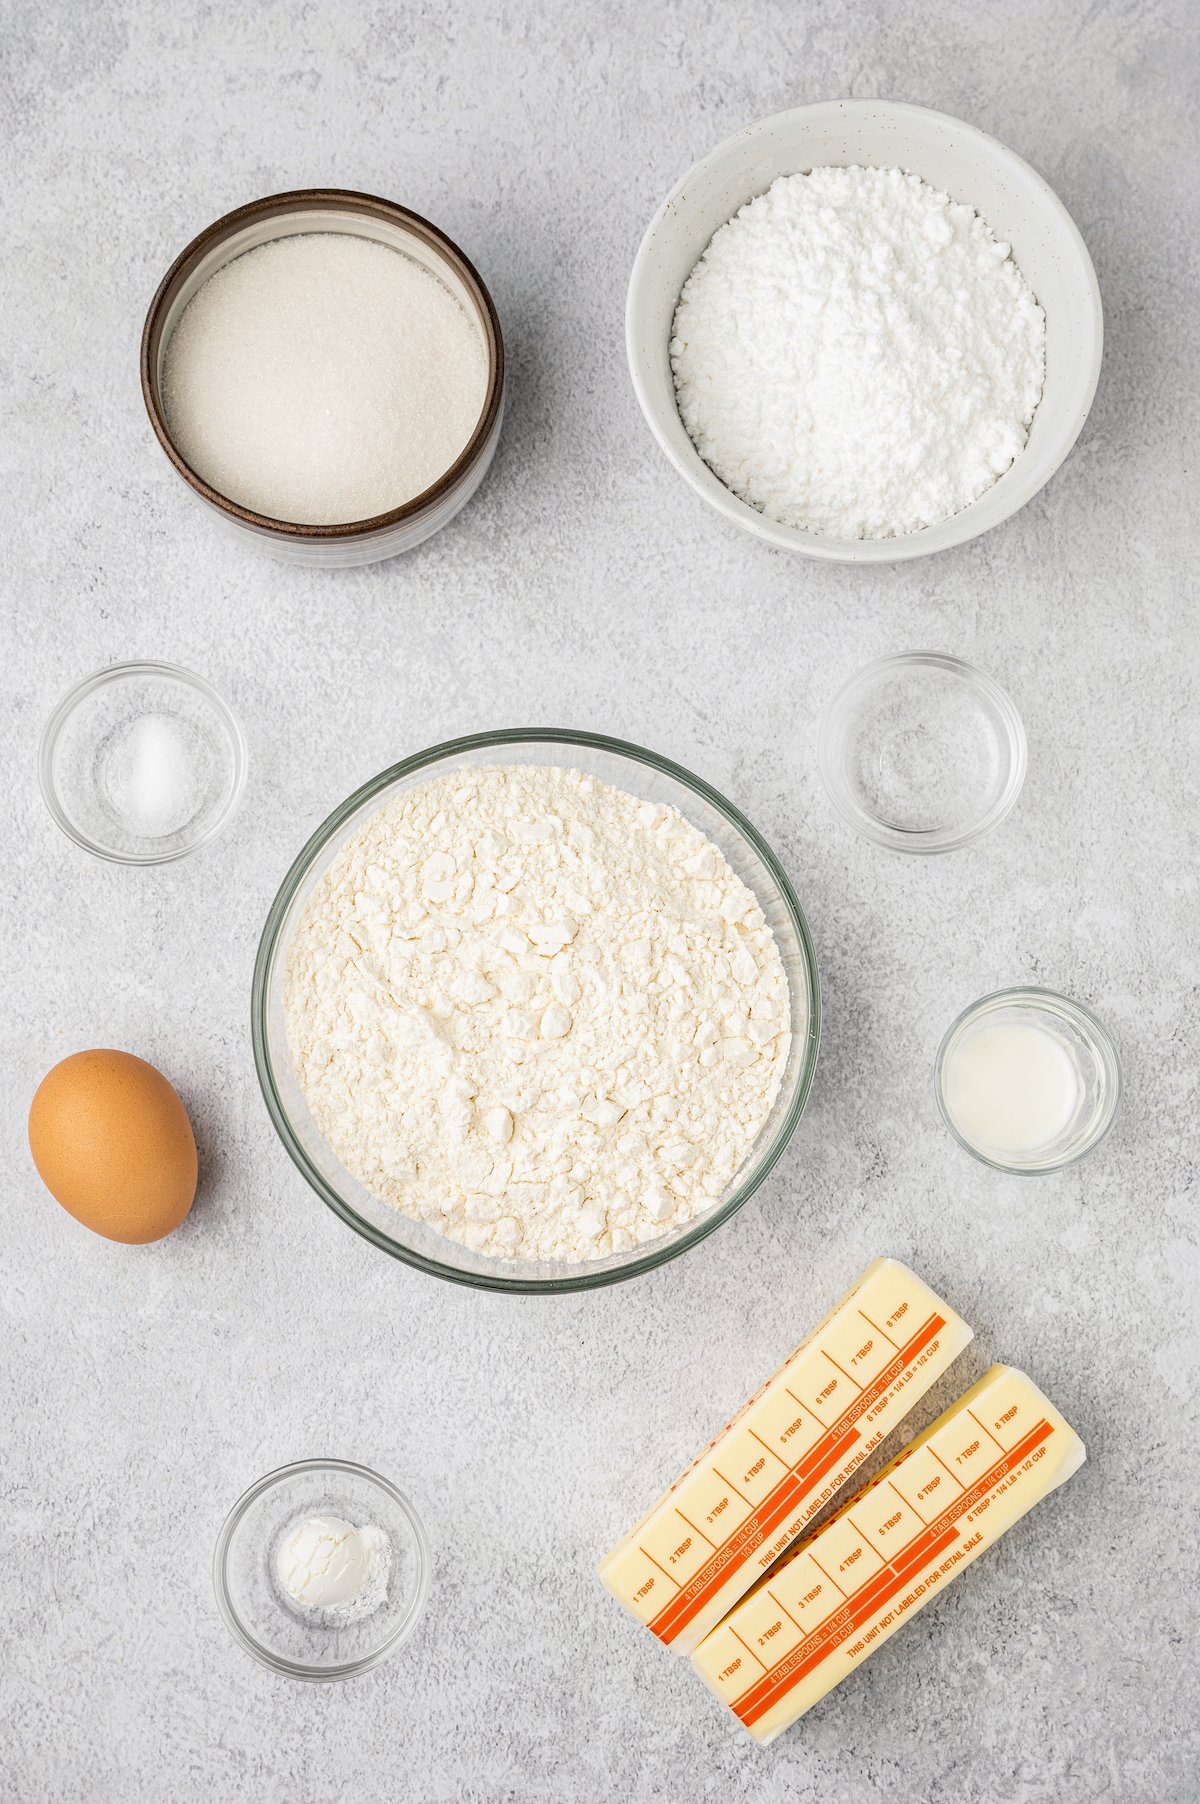 From top: Granulated sugar, powdered sugar, salt, flour, almond extract, egg, milk, baking powder, butter.